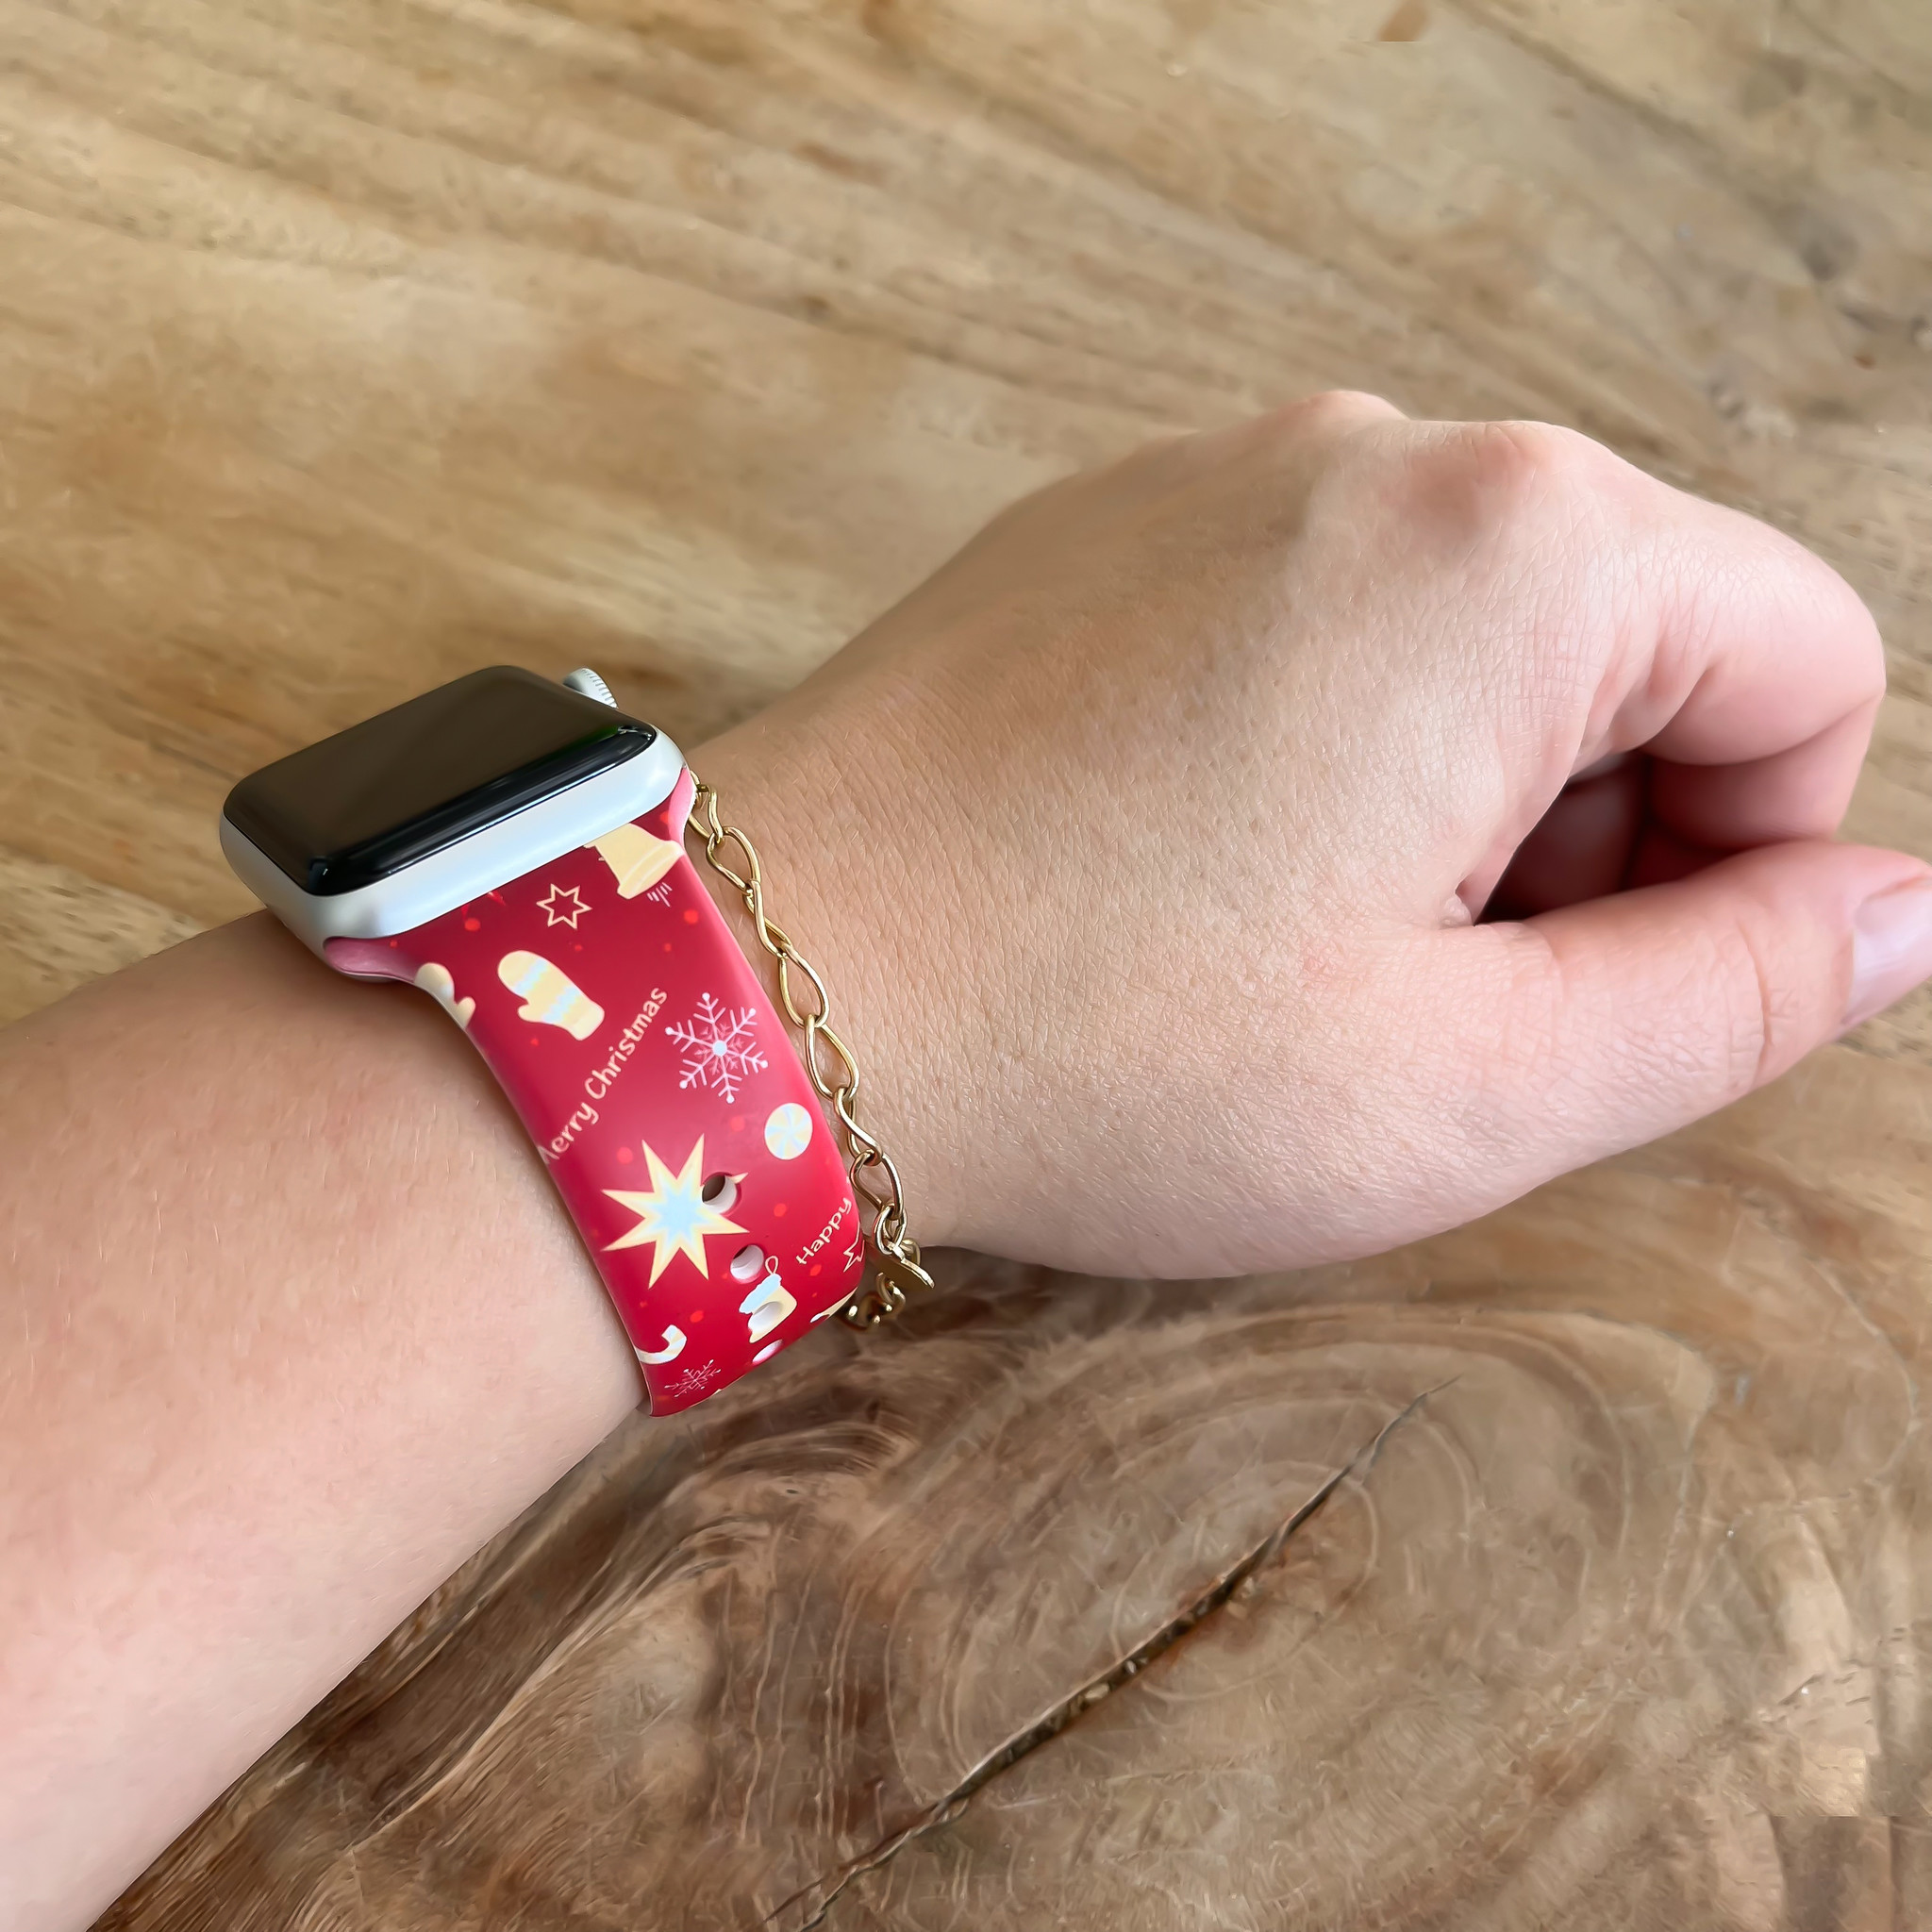 Apple Watch print sport band - kerst rood